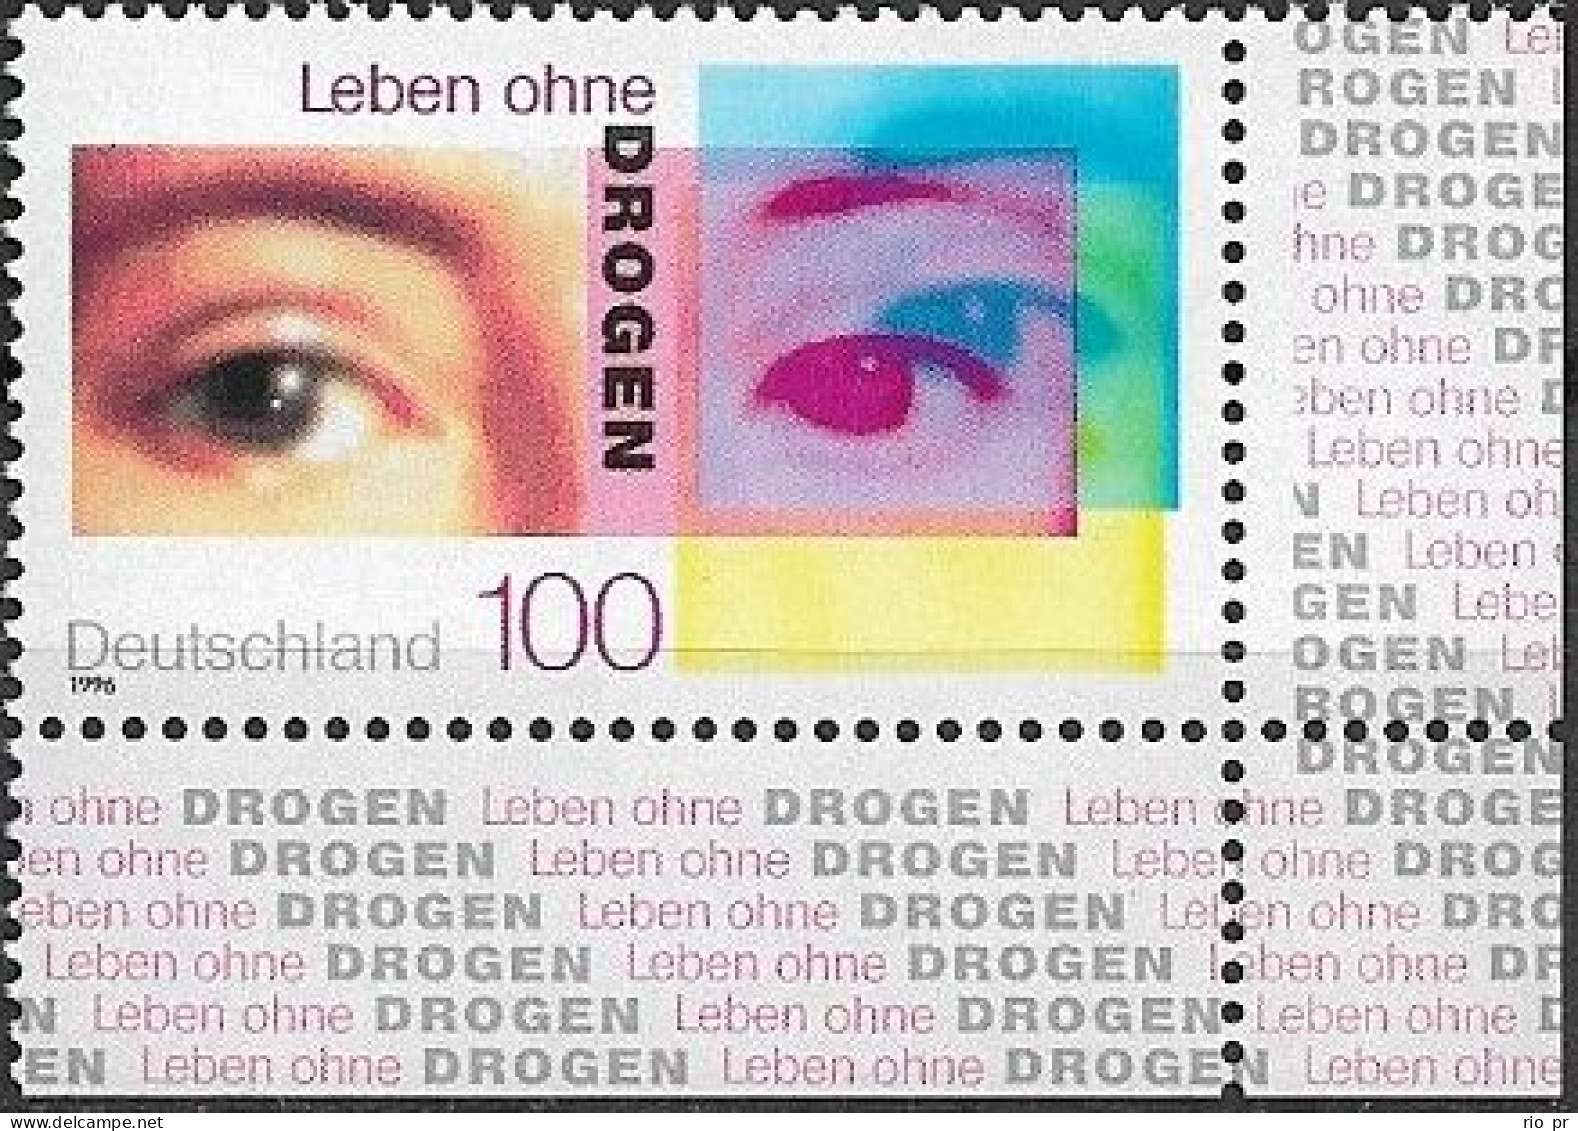 GERMANY (BRD) - CAMPAIGN AGAINST DRUG ABUSE (BOTTON RIGHT CORNER) 1996 - MNH - Droga